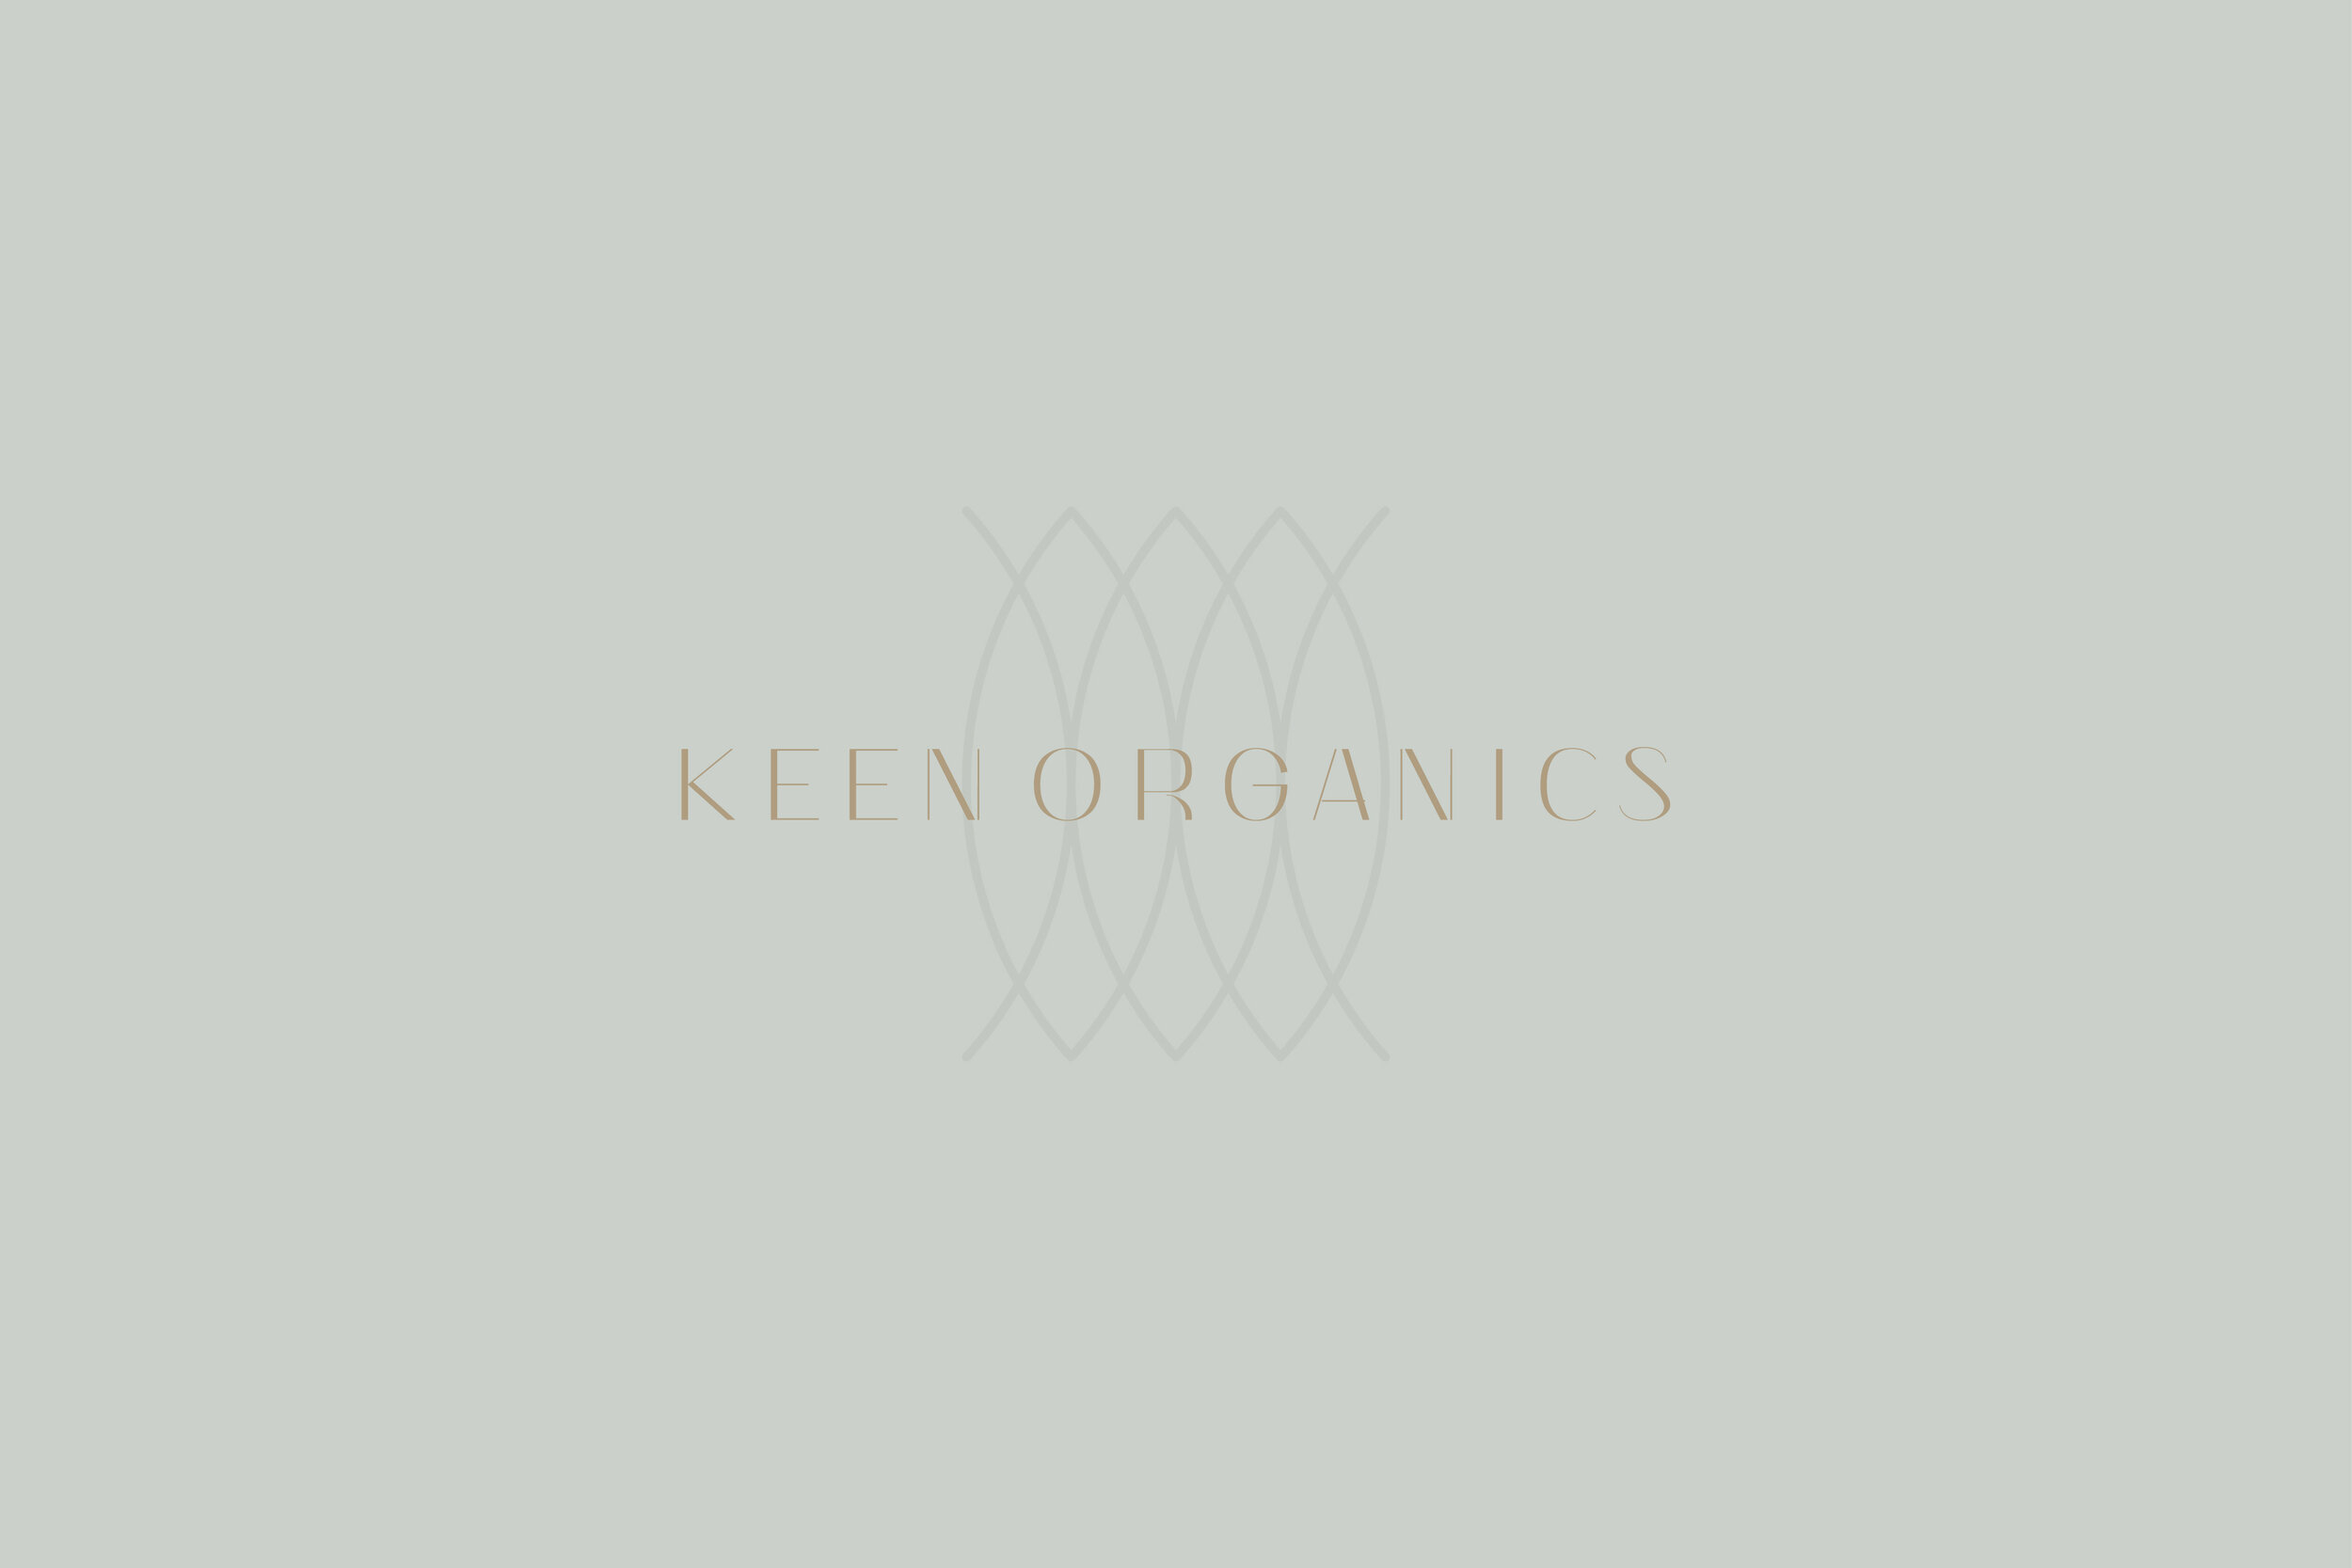 Sarah Magidoff_CANOPY_Keen Organics_01 Logo Design.jpg